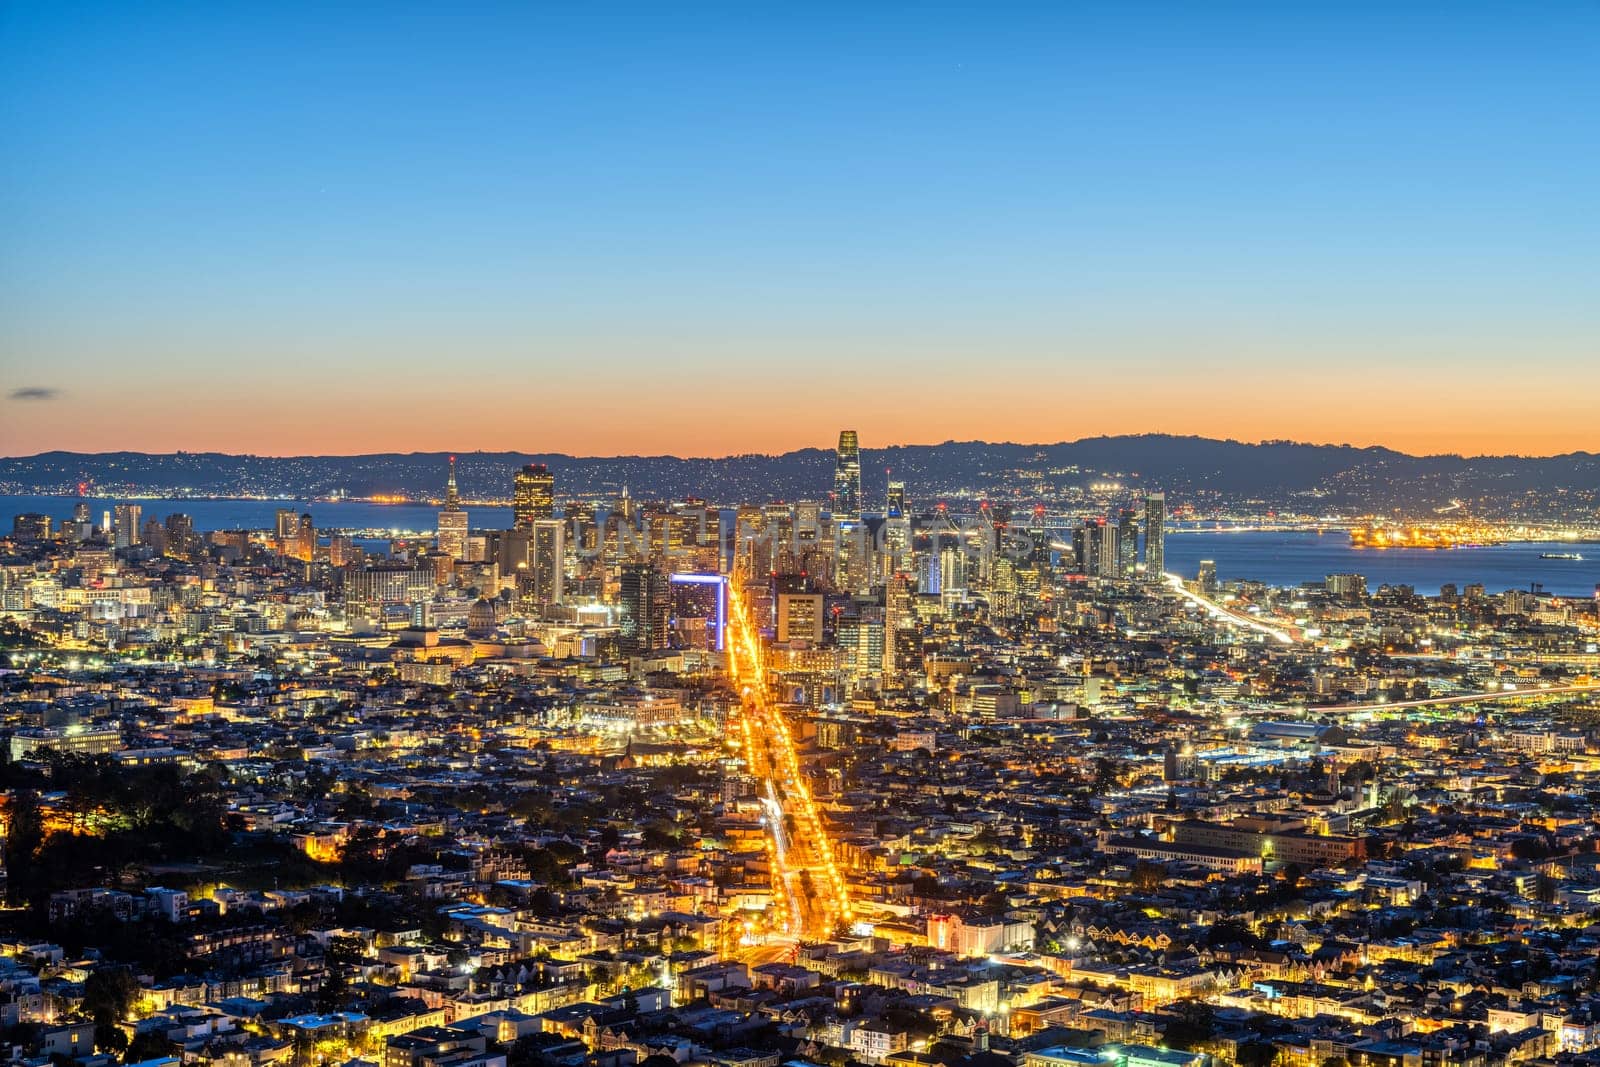 The skyline of San Francisco before sunrise by elxeneize